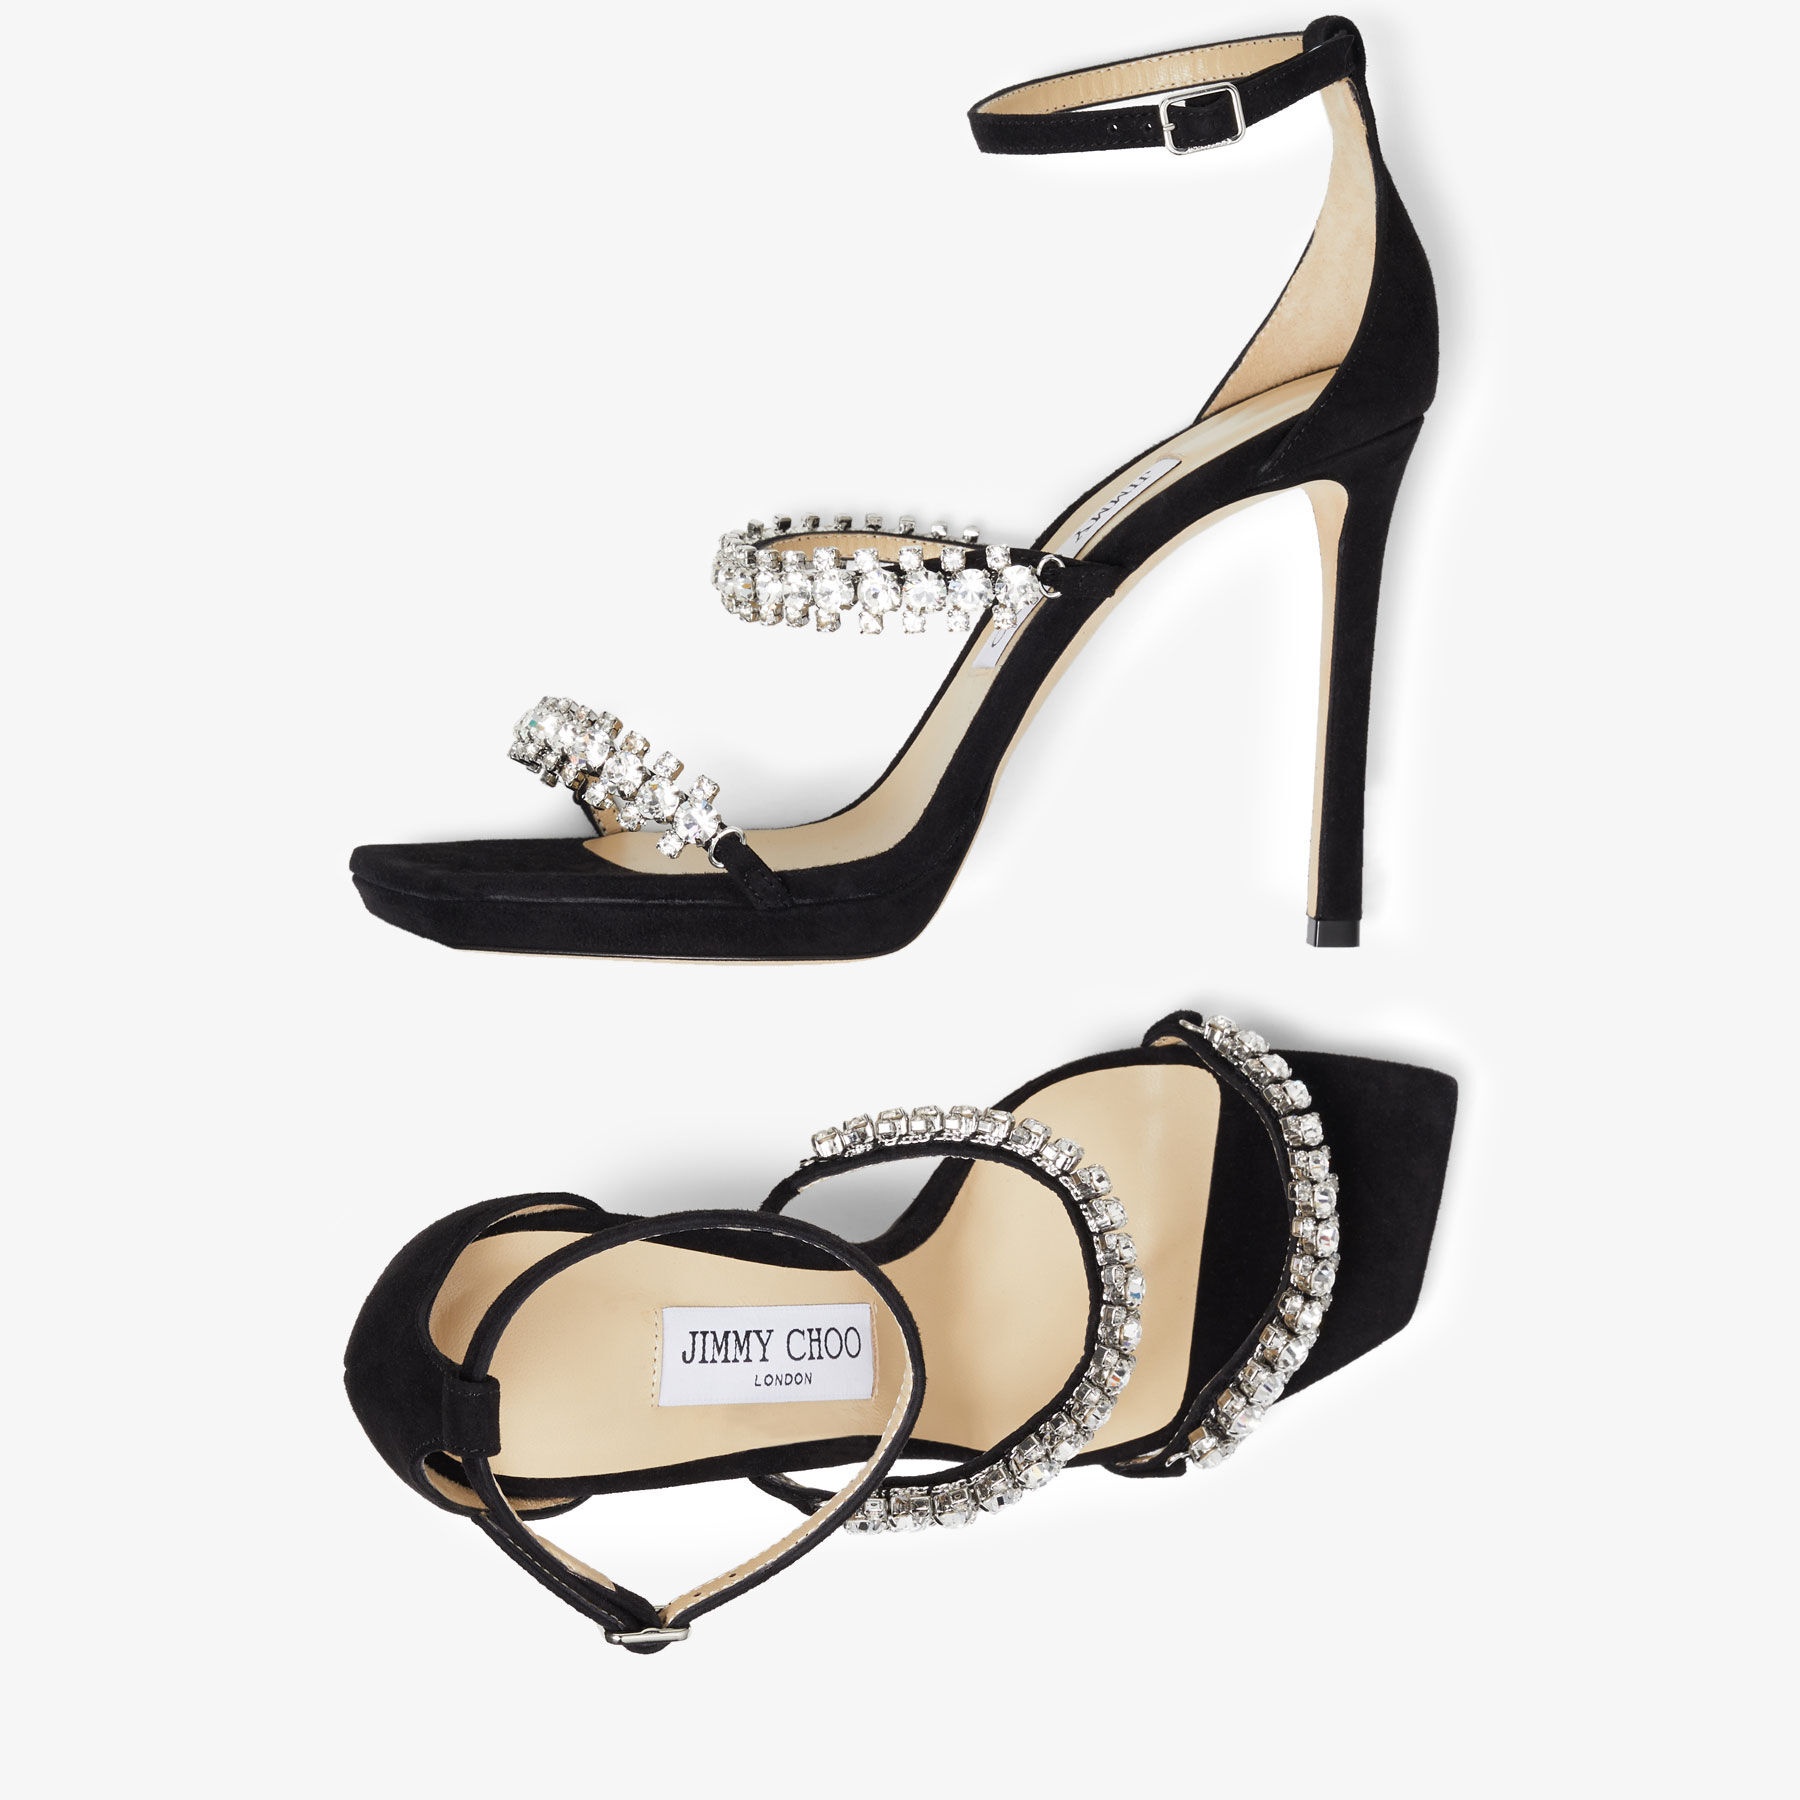 Bing Sandal 105
Black Suede Sandals with Crystal Straps - 5